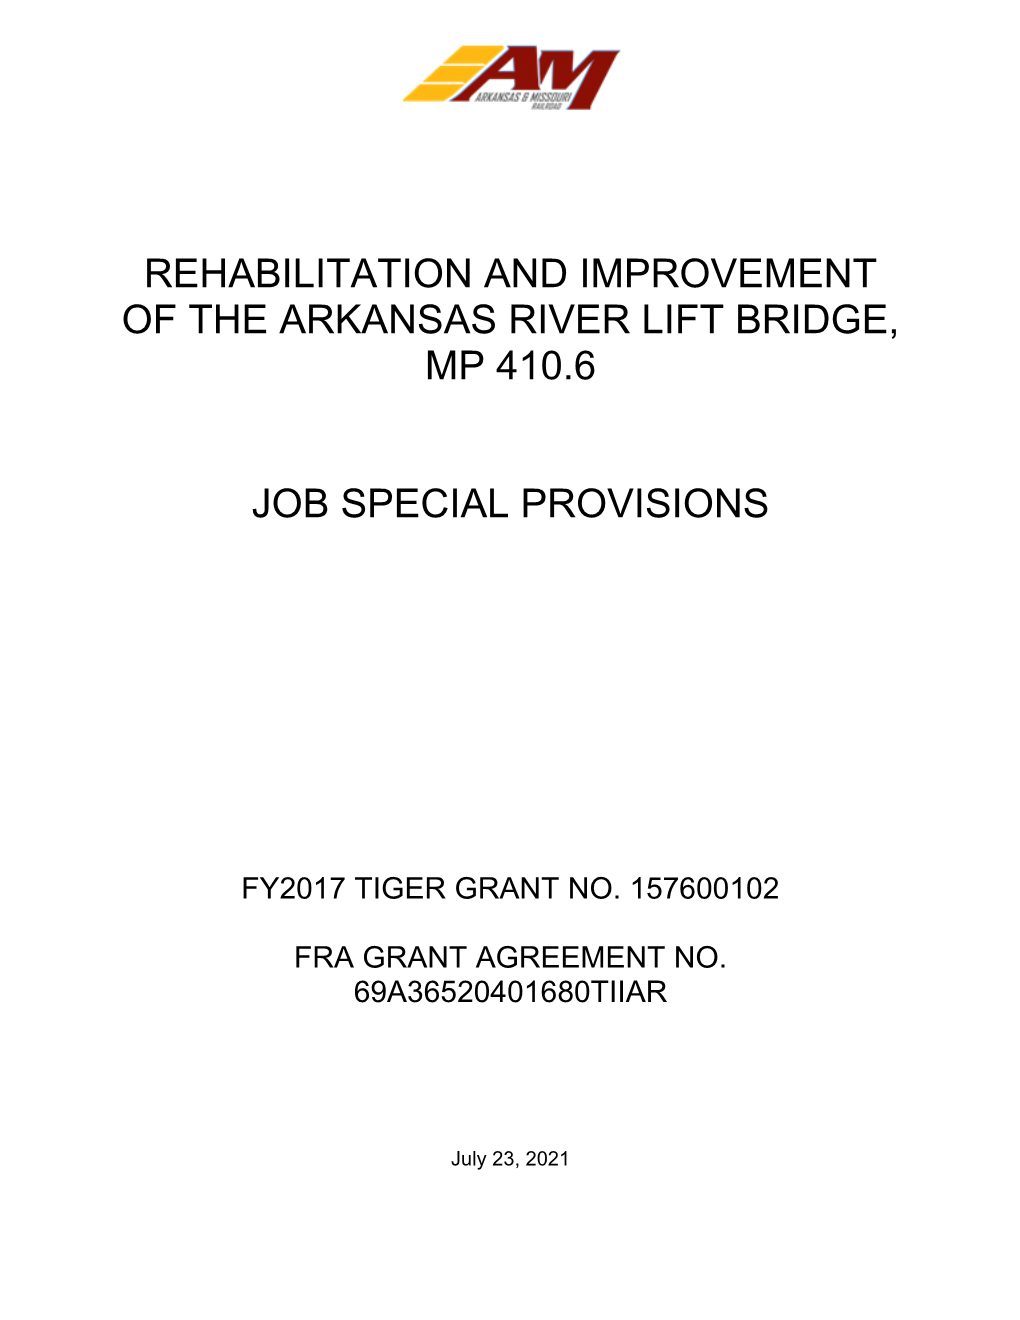 Rehabilitation and Improvement of the Arkansas River Lift Bridge, Mp 410.6